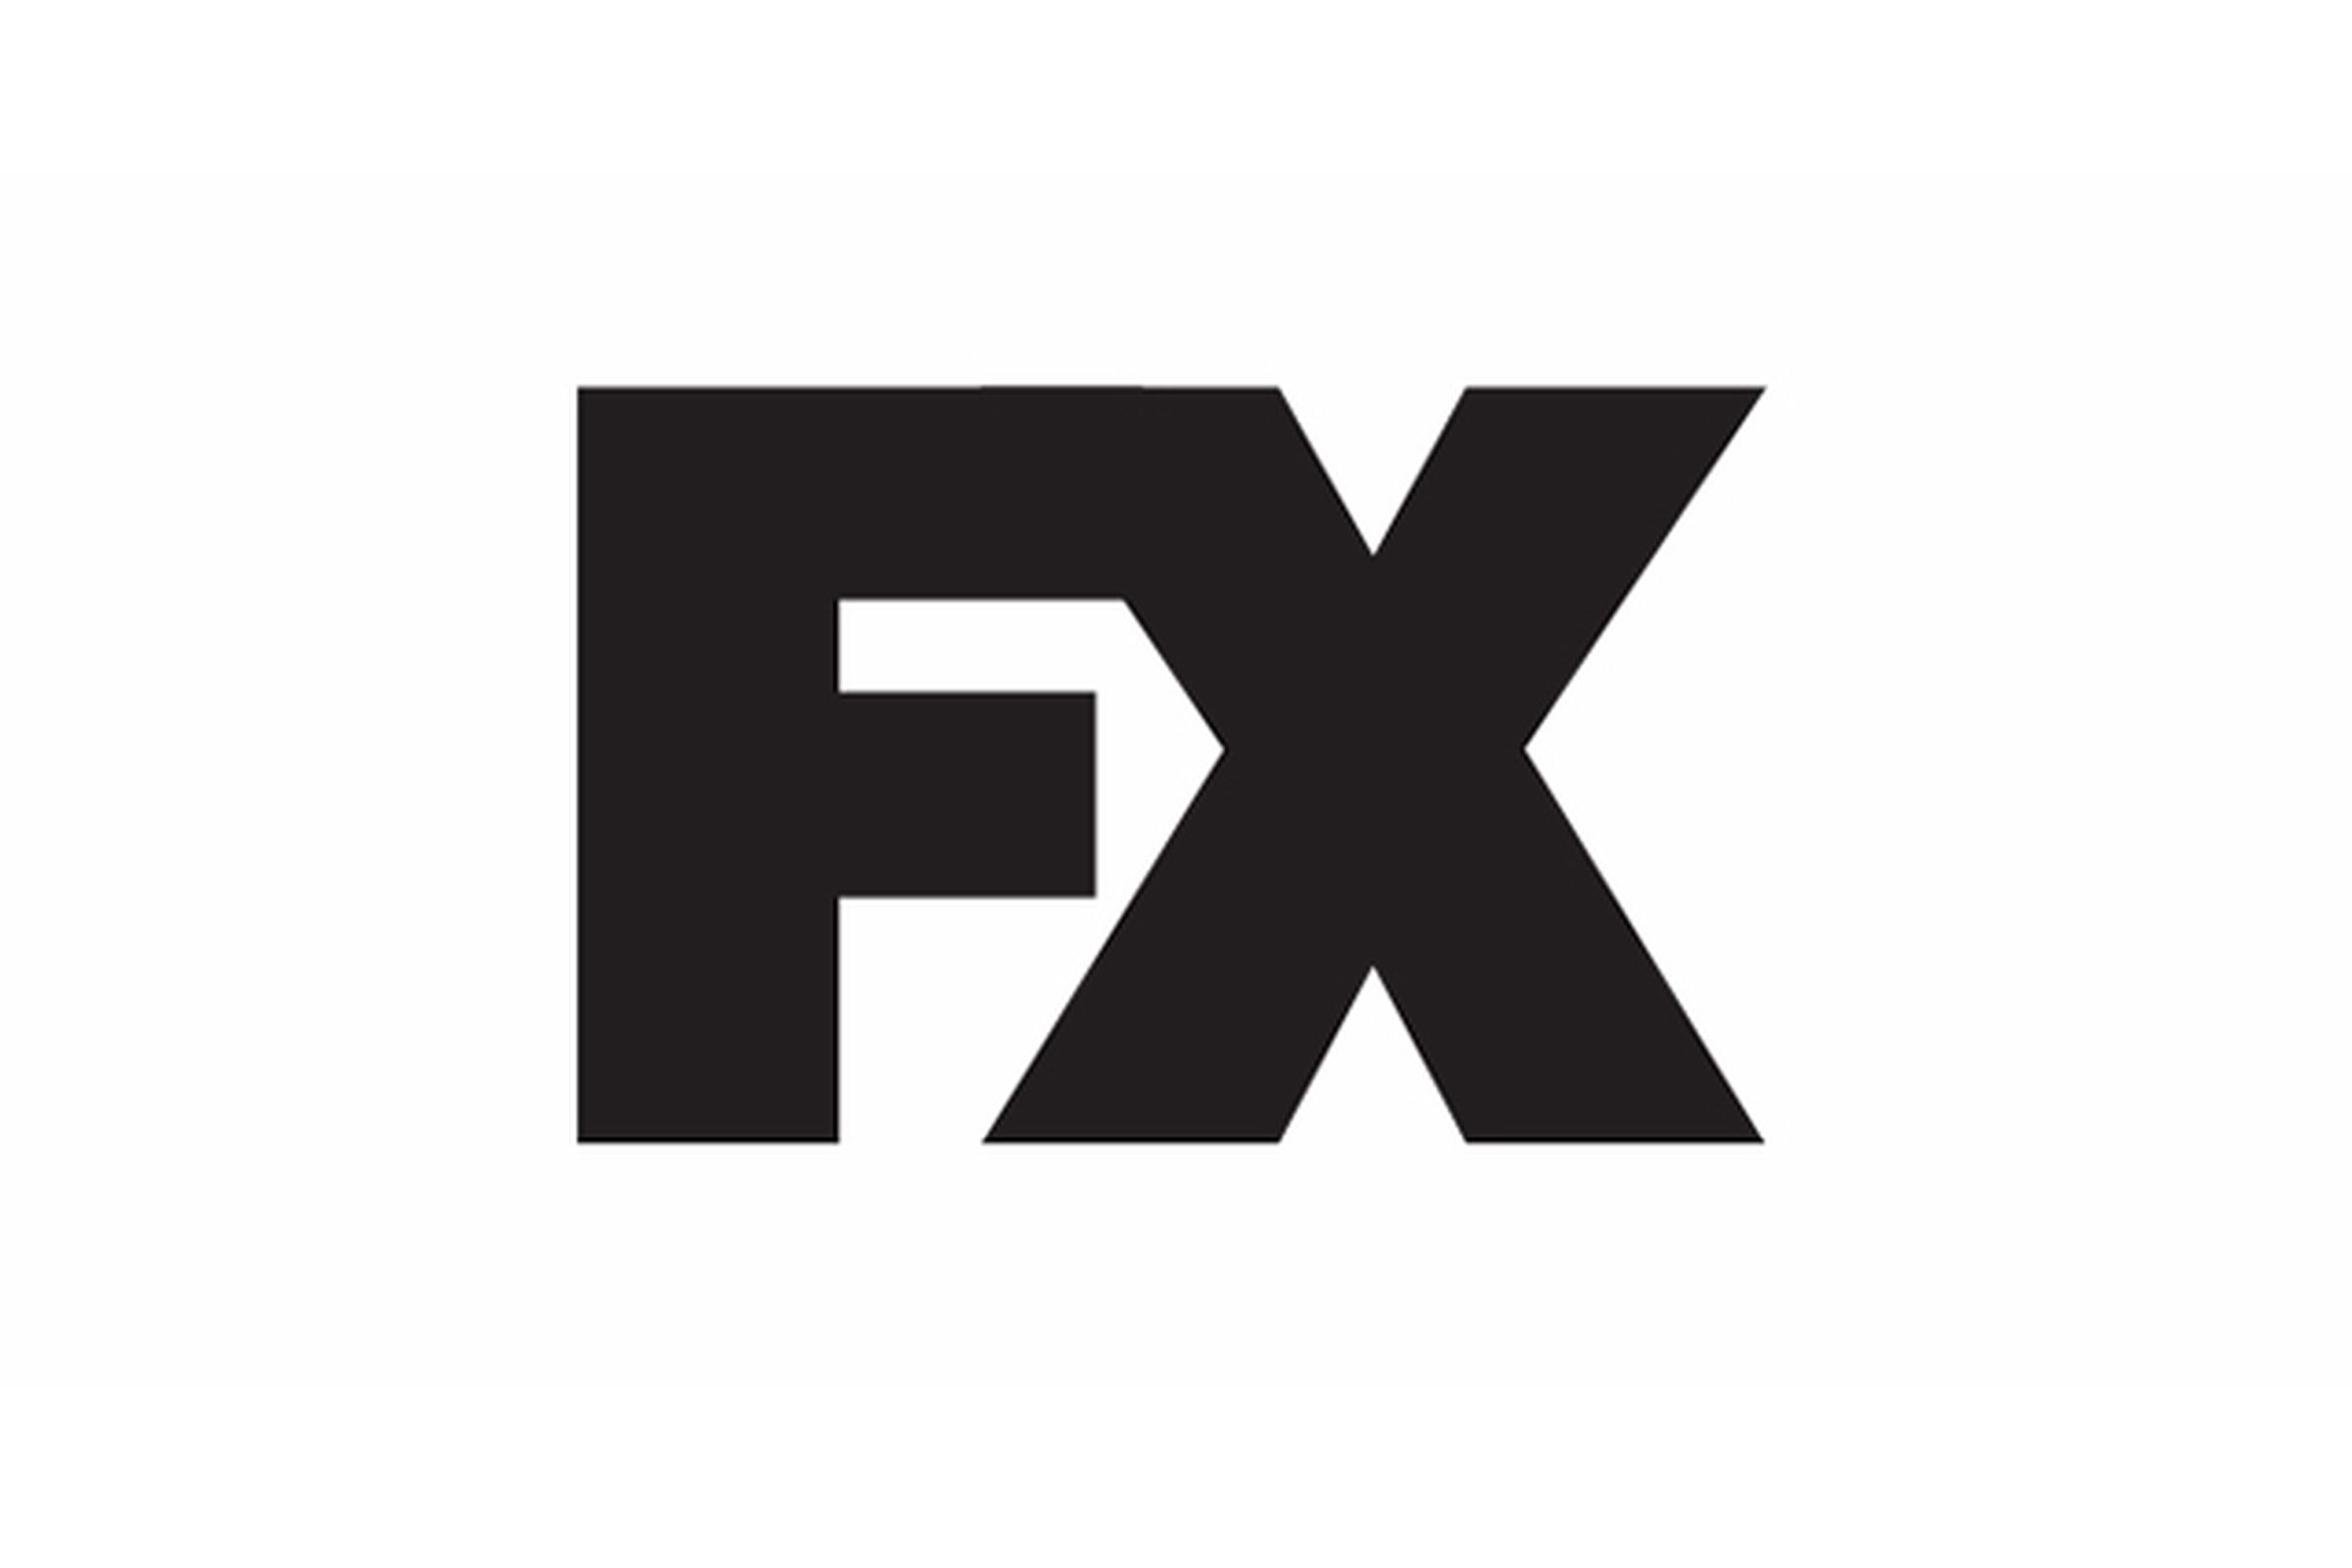 FX Networks logo